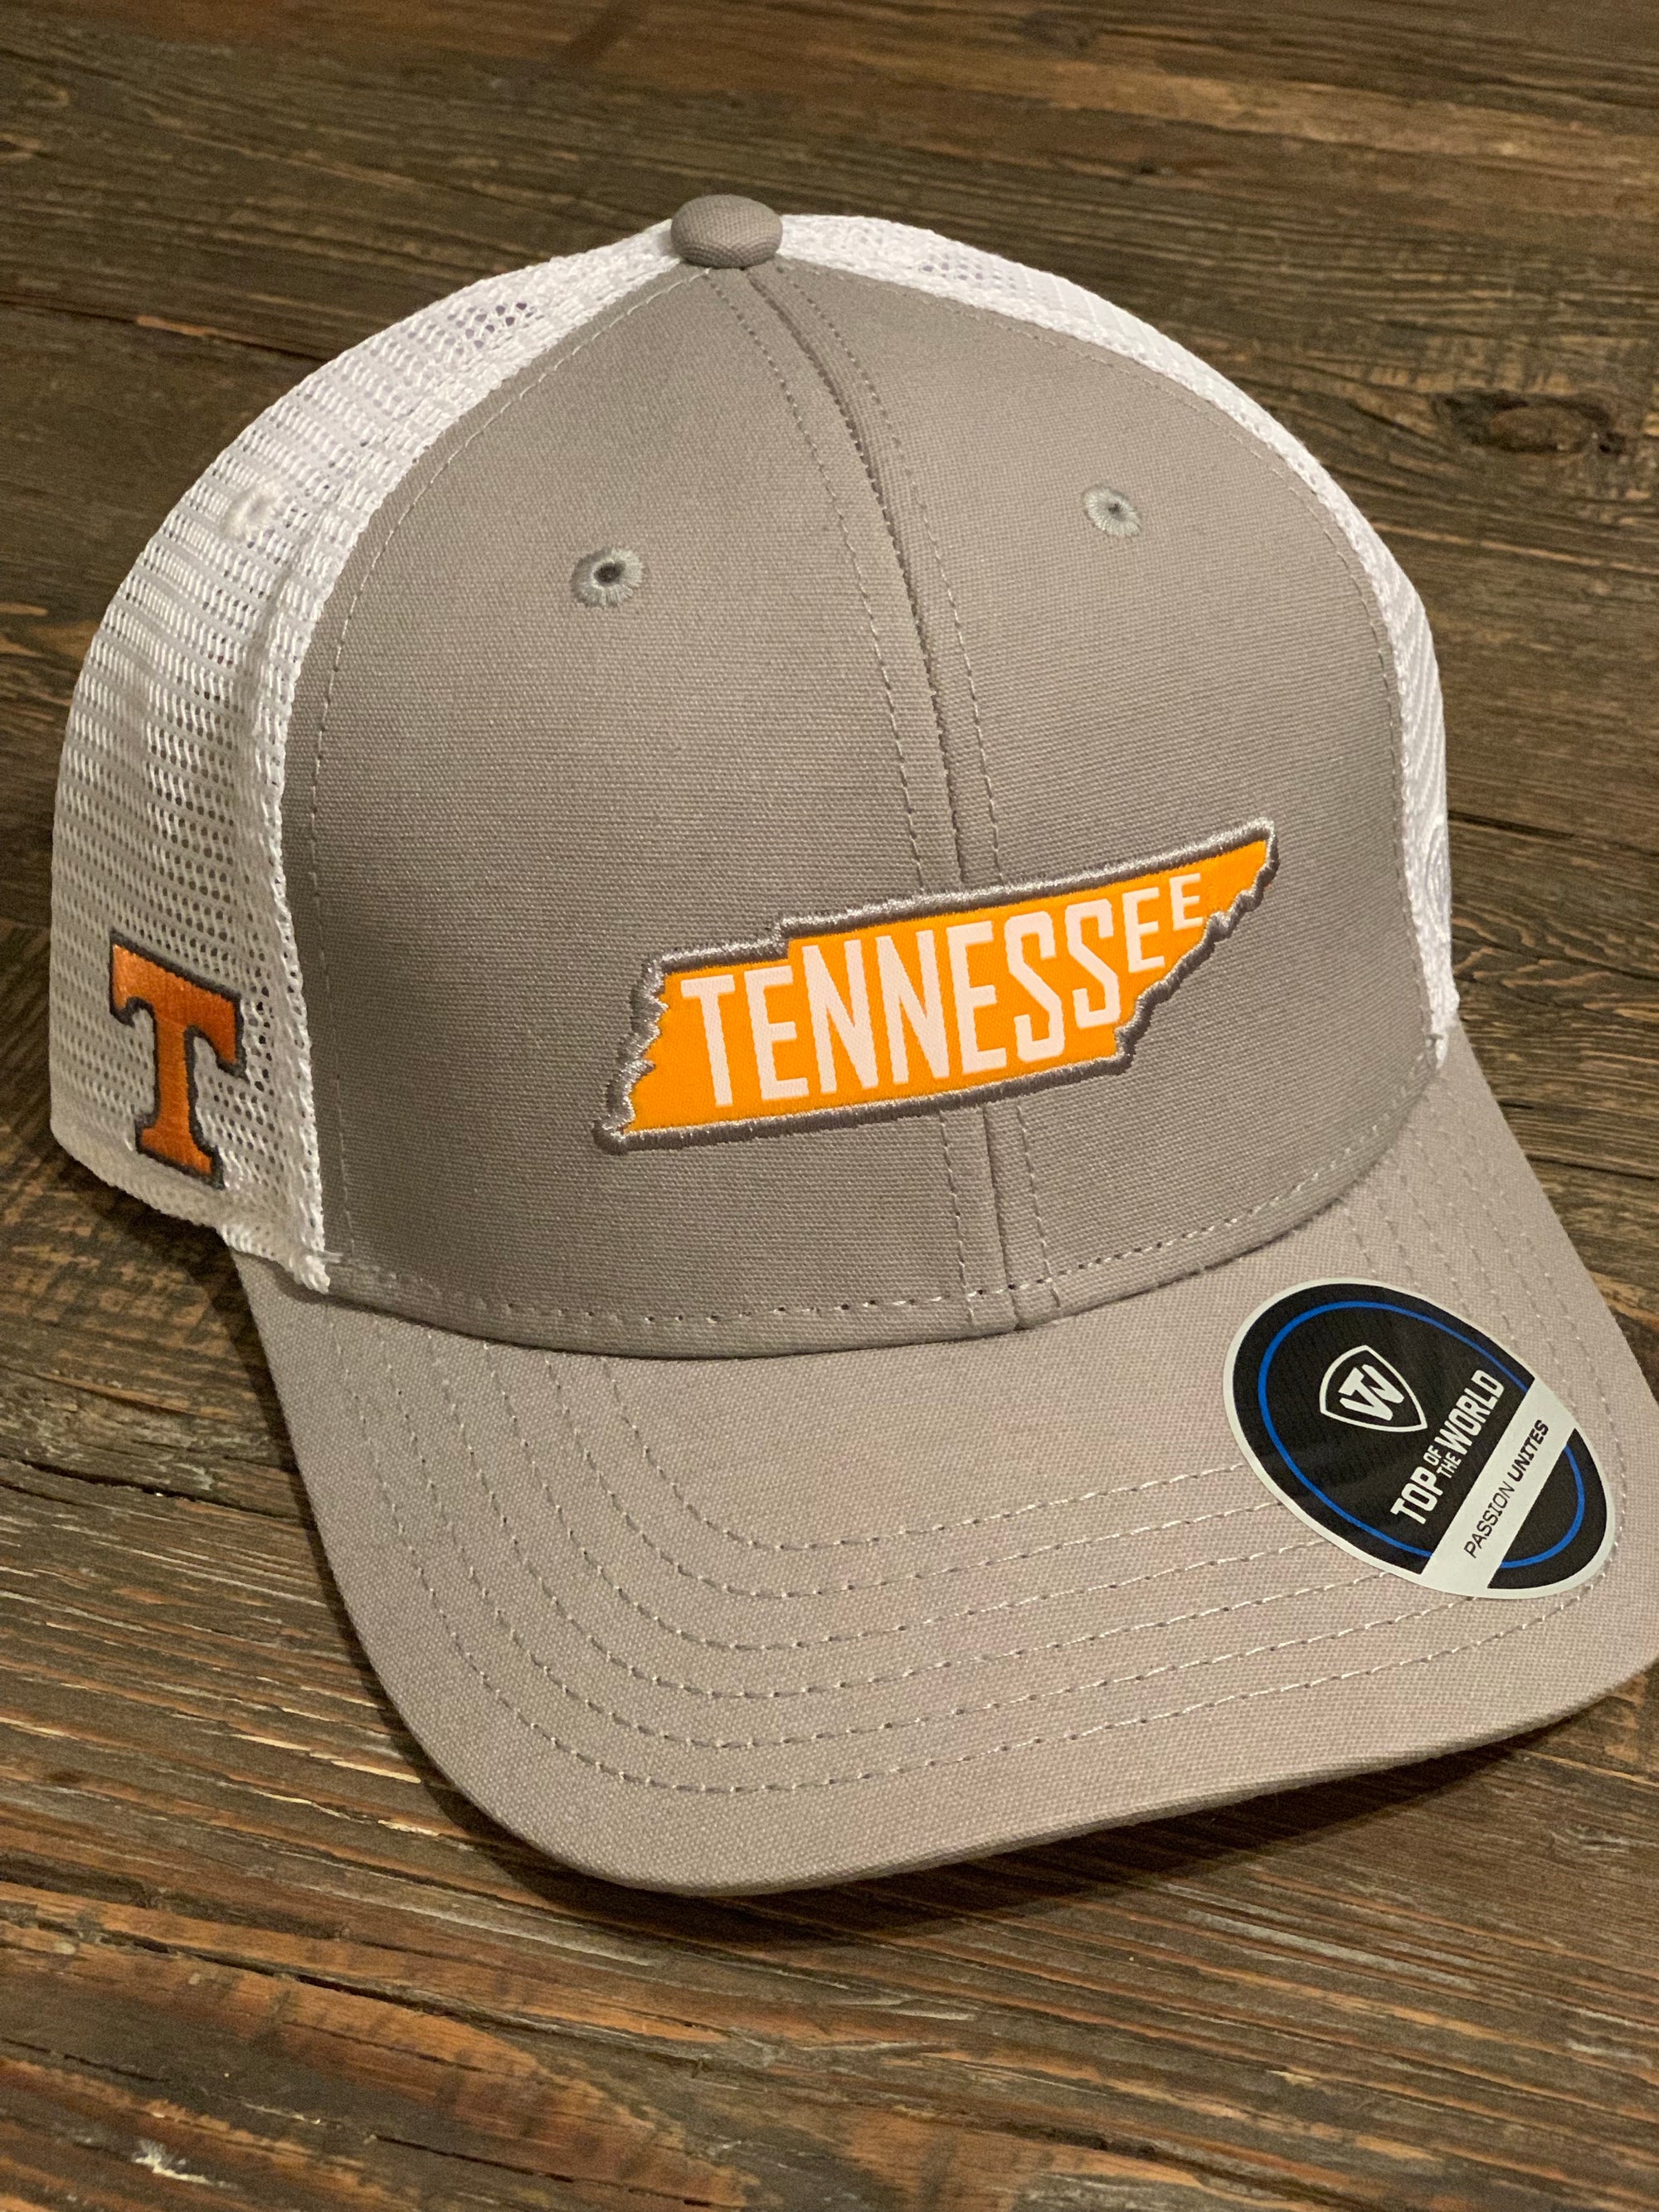 Tennessee "State Series" Trucker